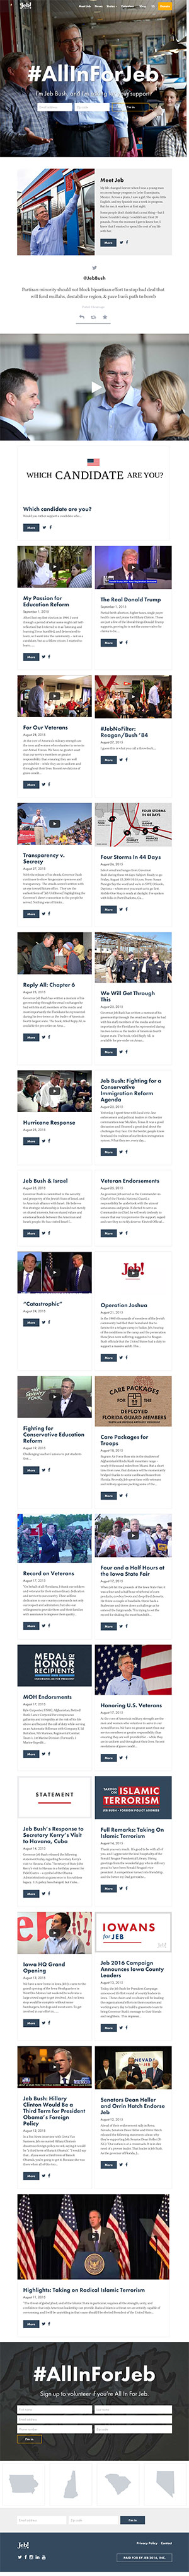 screen shot of jeb 2016 website